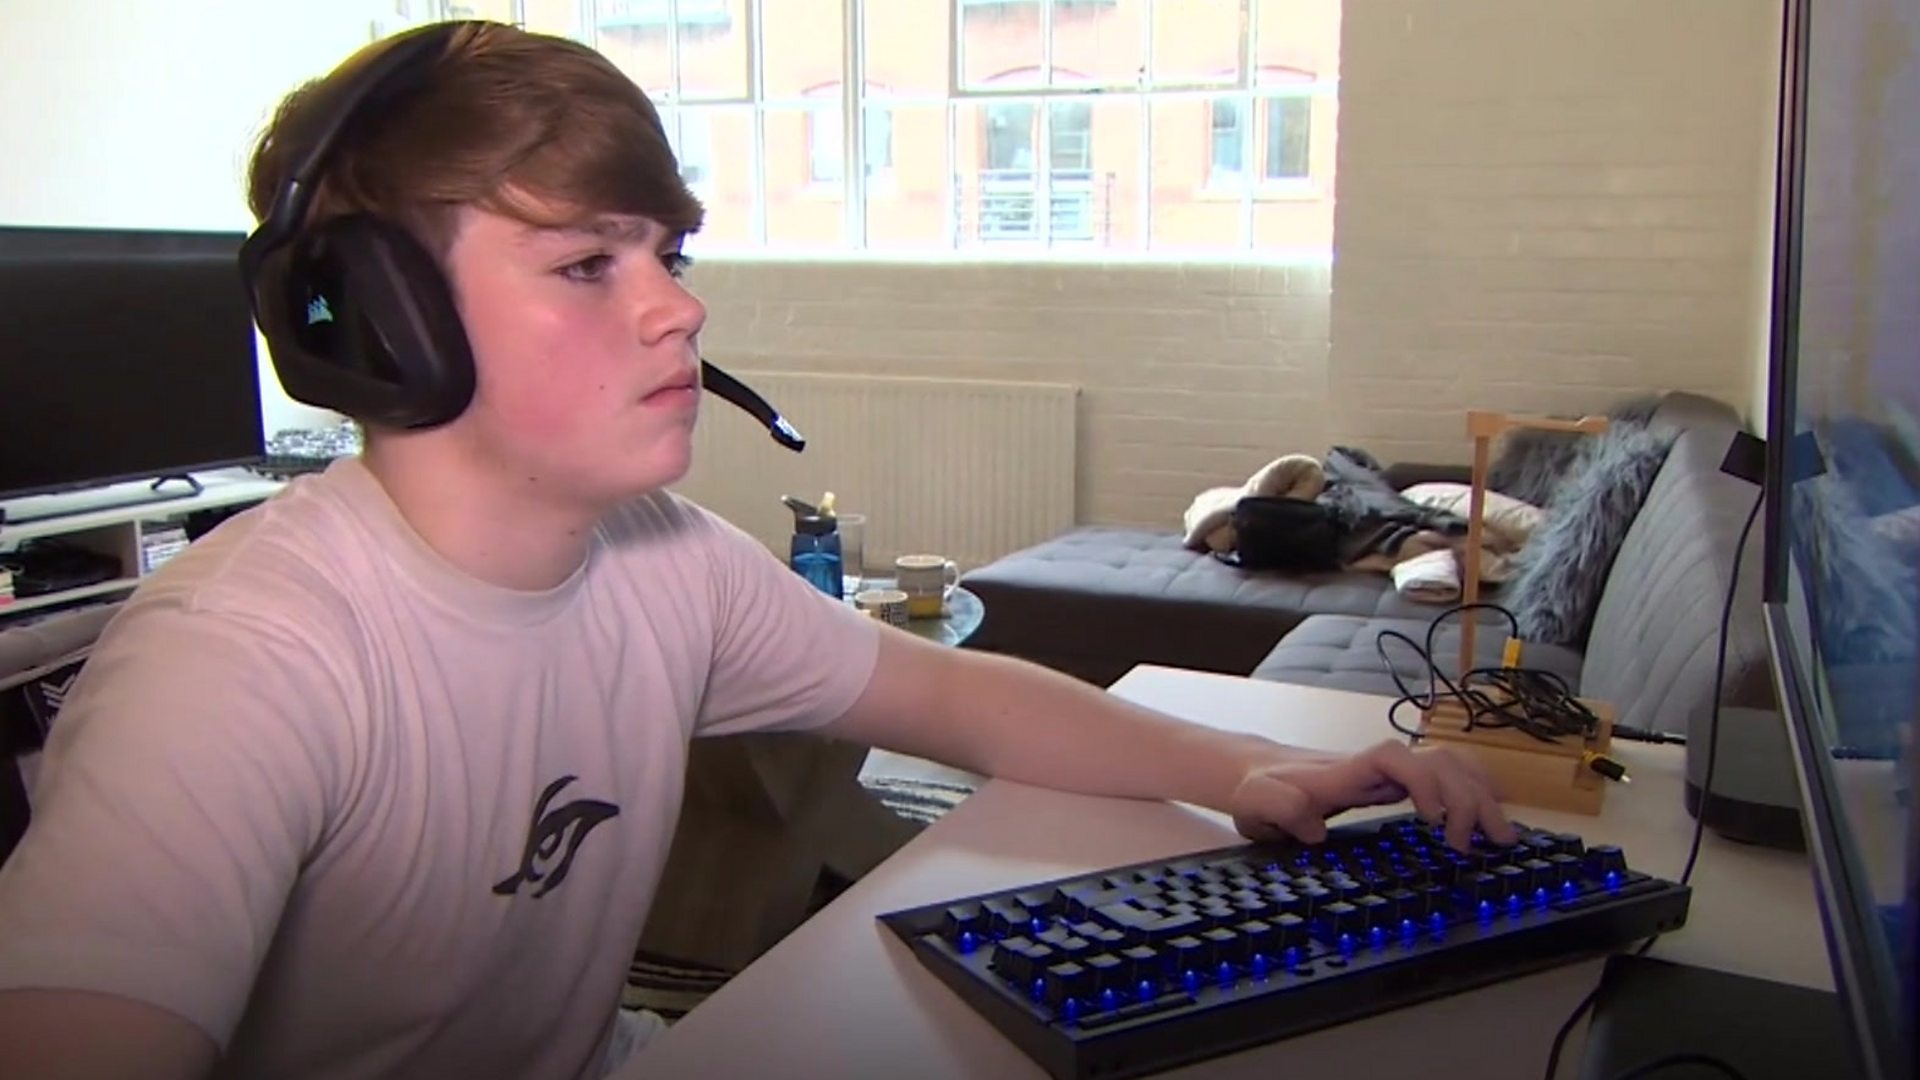 Fortnite Pro Kid Player Professional Fortnite Gamer At 13 A Dream For All Kids Bbc News